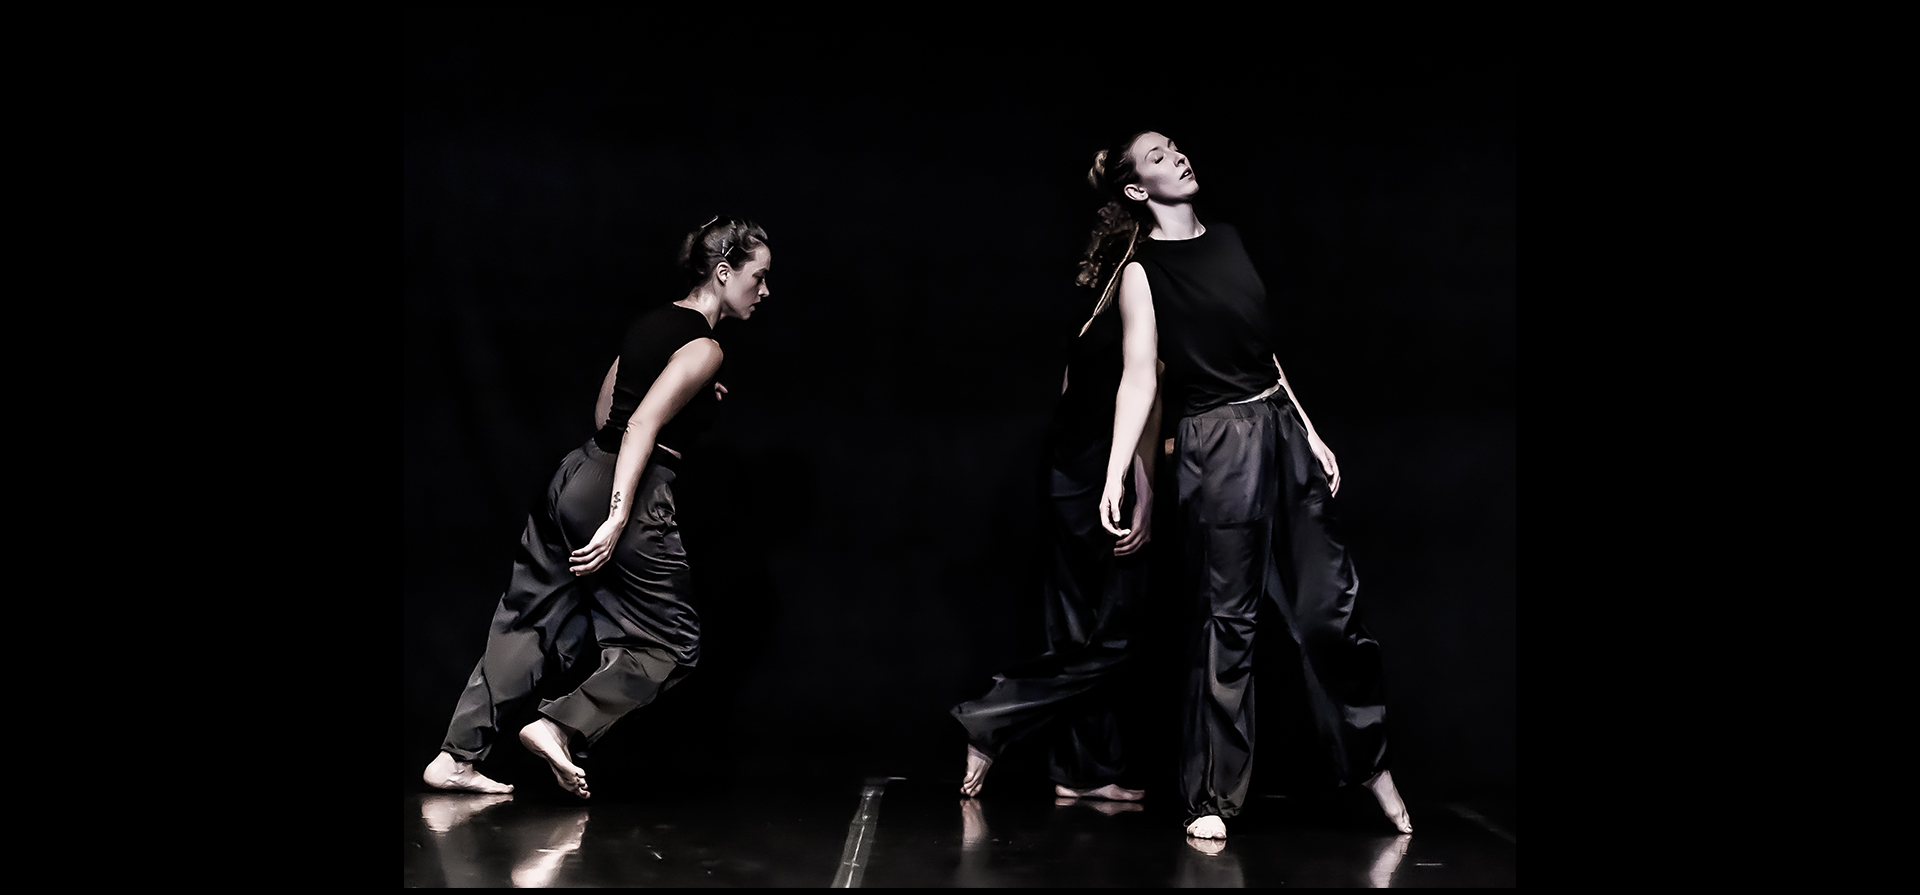 Tempo Rubato - by Alexandre Iseli - photo by Robert Stuckenberg - Cover 5 - Tipperary Dance